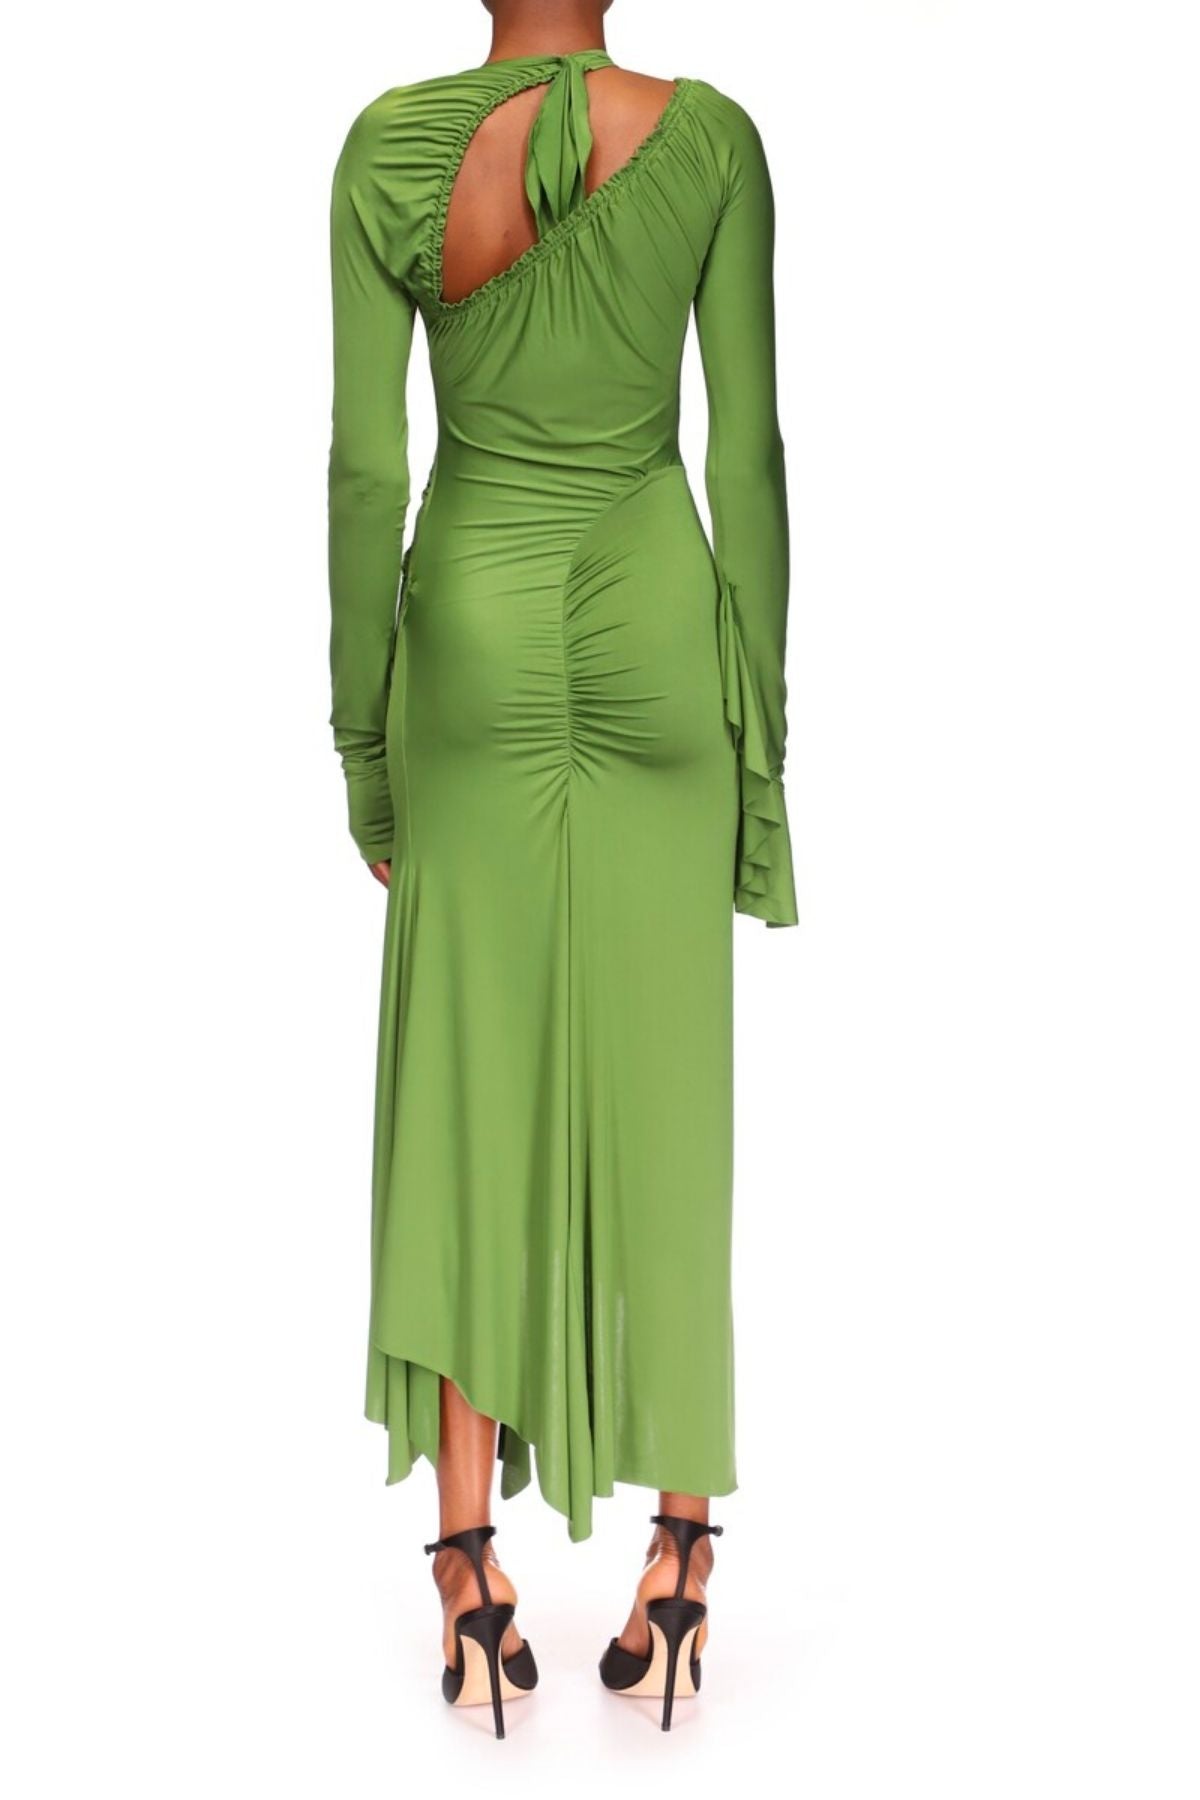 Victoria Beckham Asymmetric Slash Jersey Dress - Fern